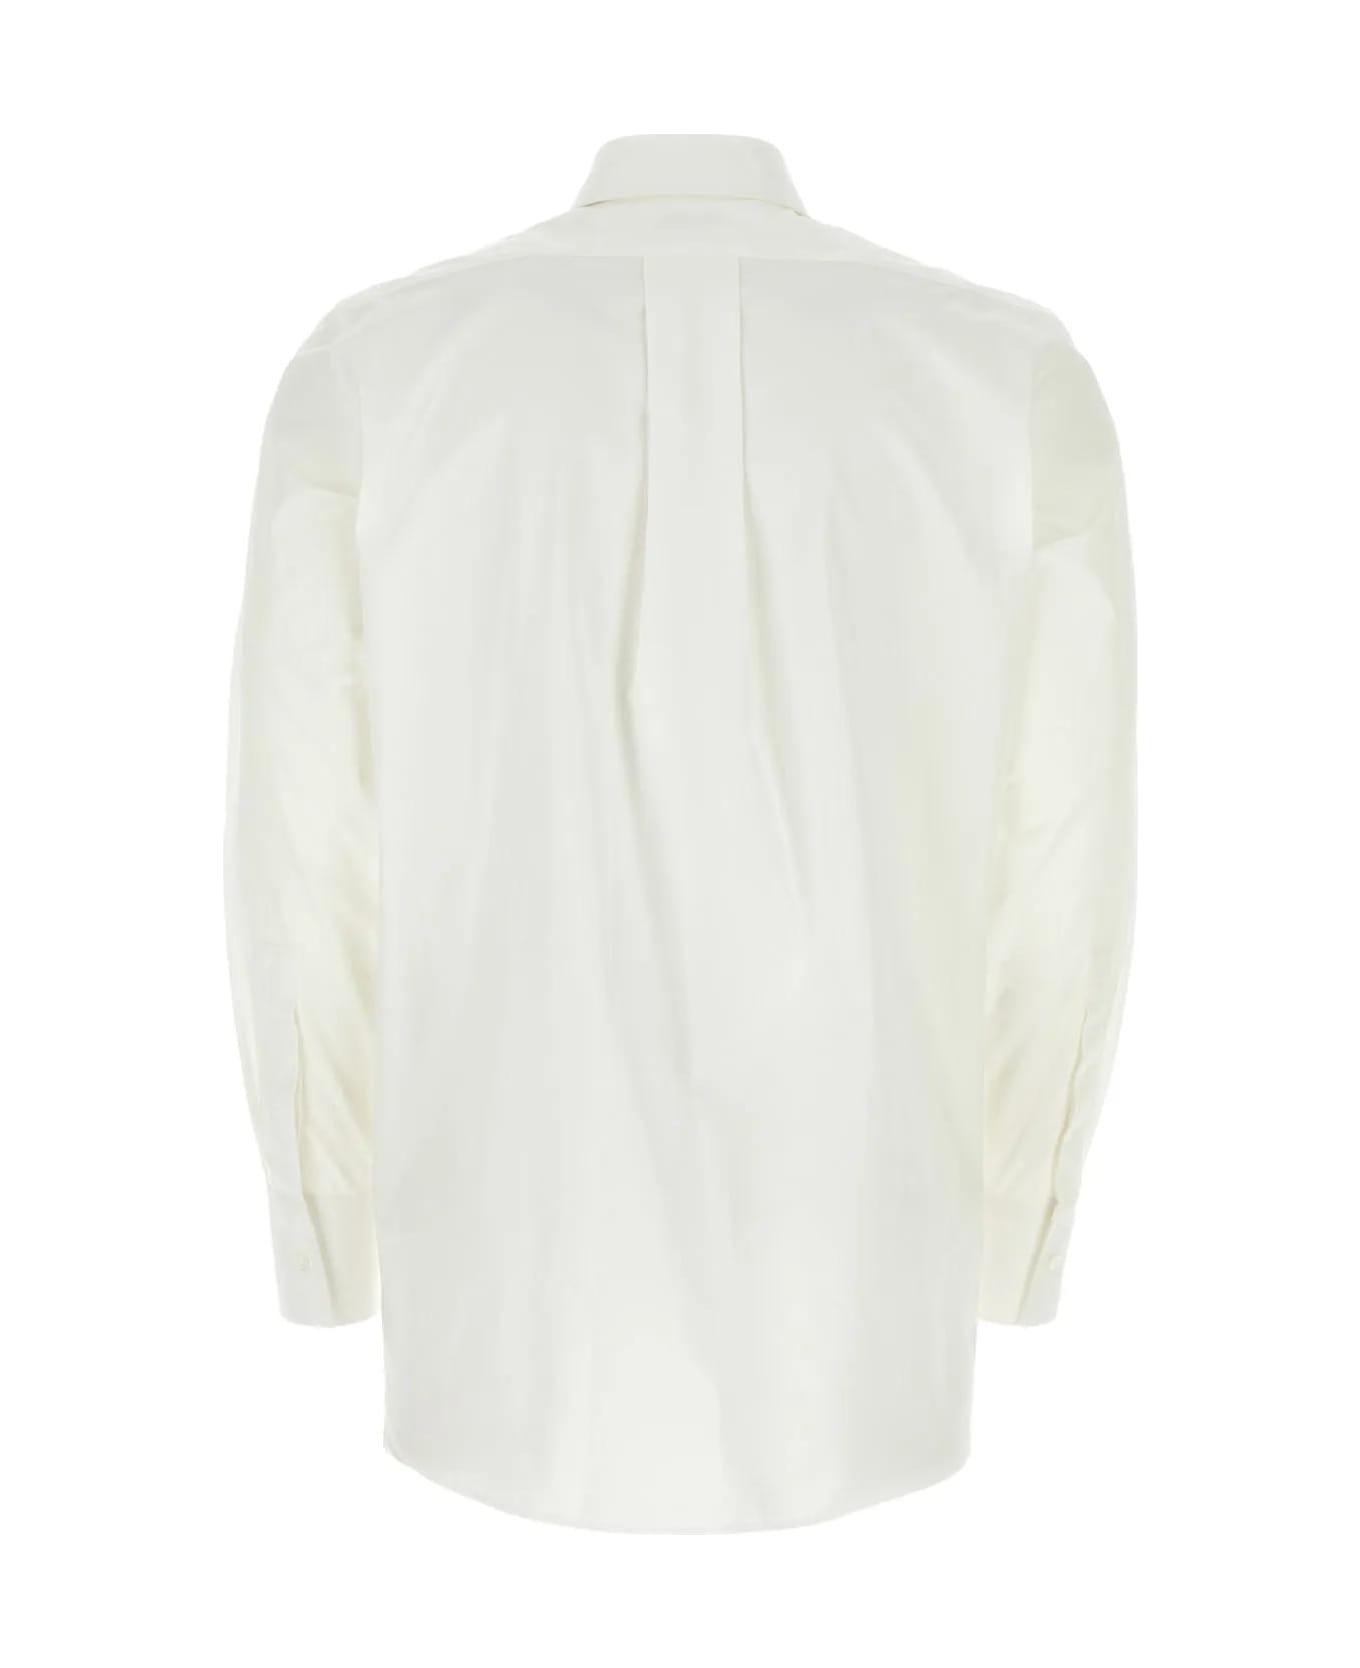 Burberry Whit Poplin Shirt - White